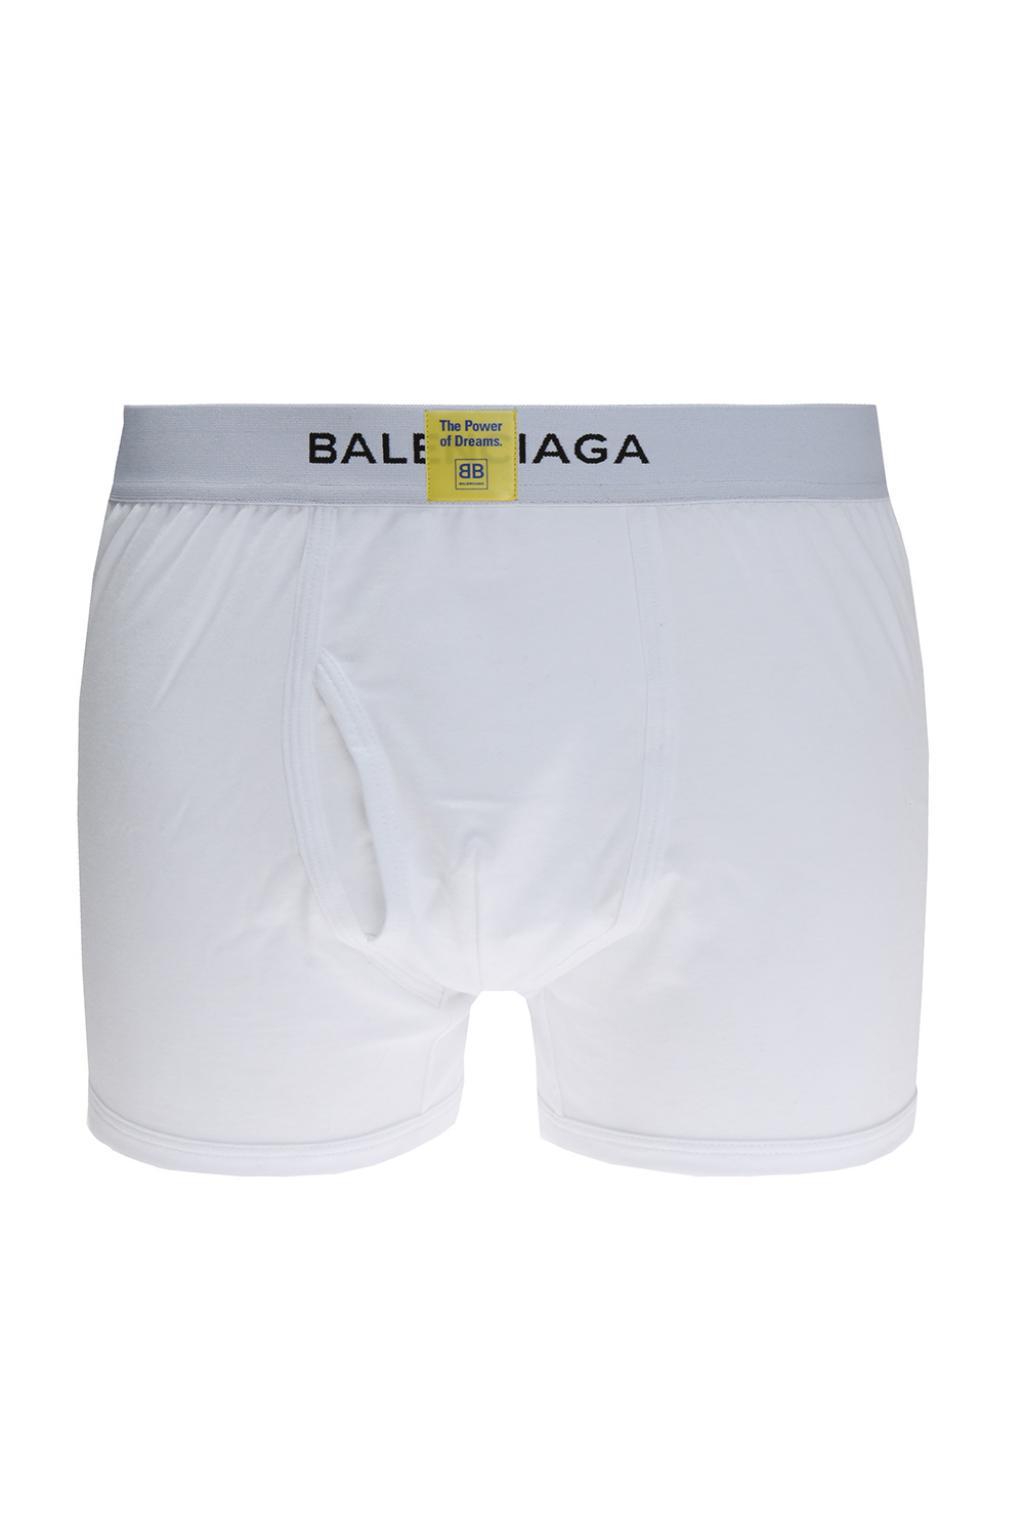 Balenciaga Cotton Boxers Three-pack for Men - Lyst